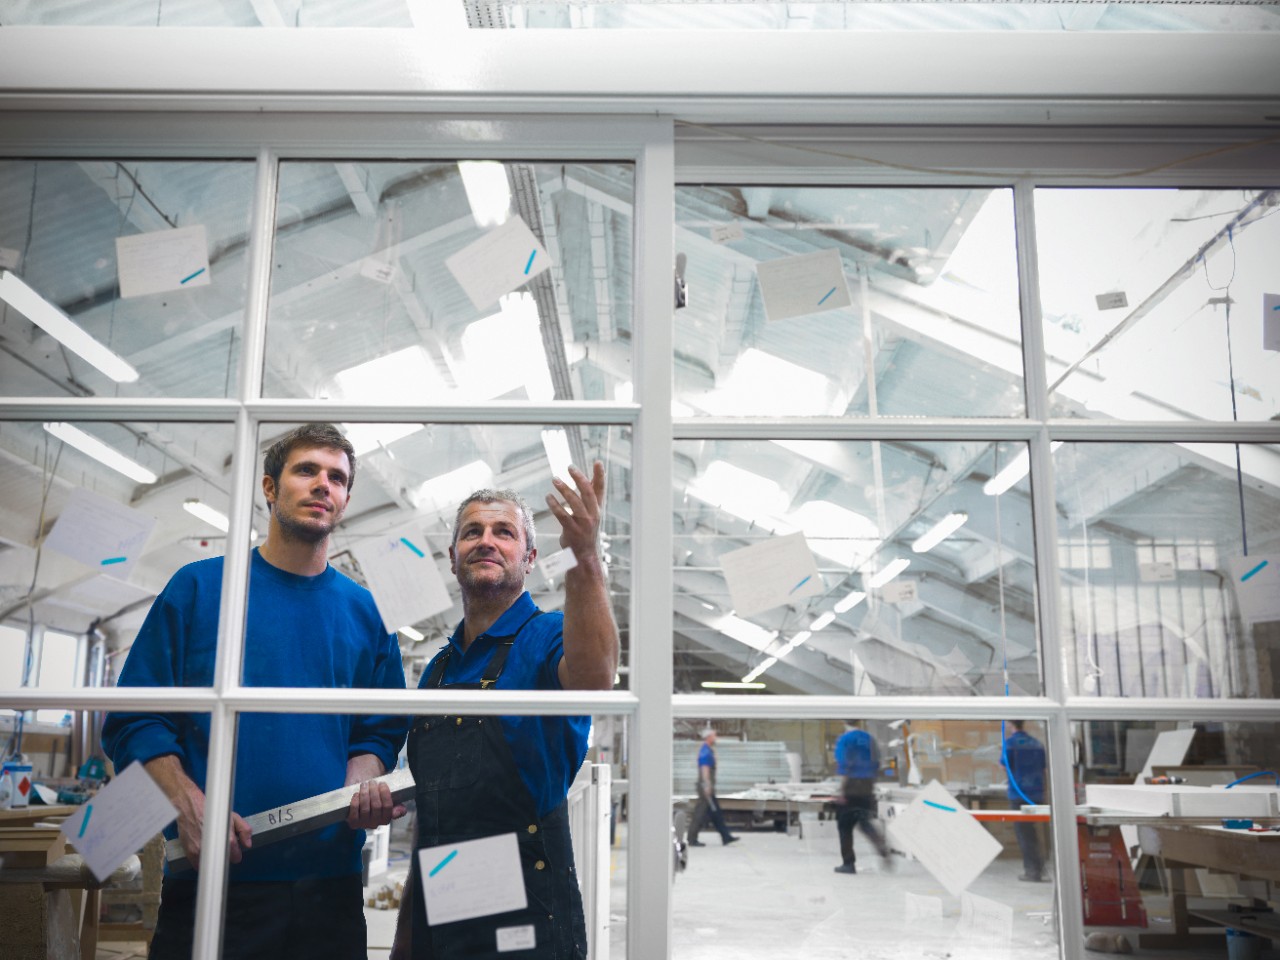 Workers examining window frames